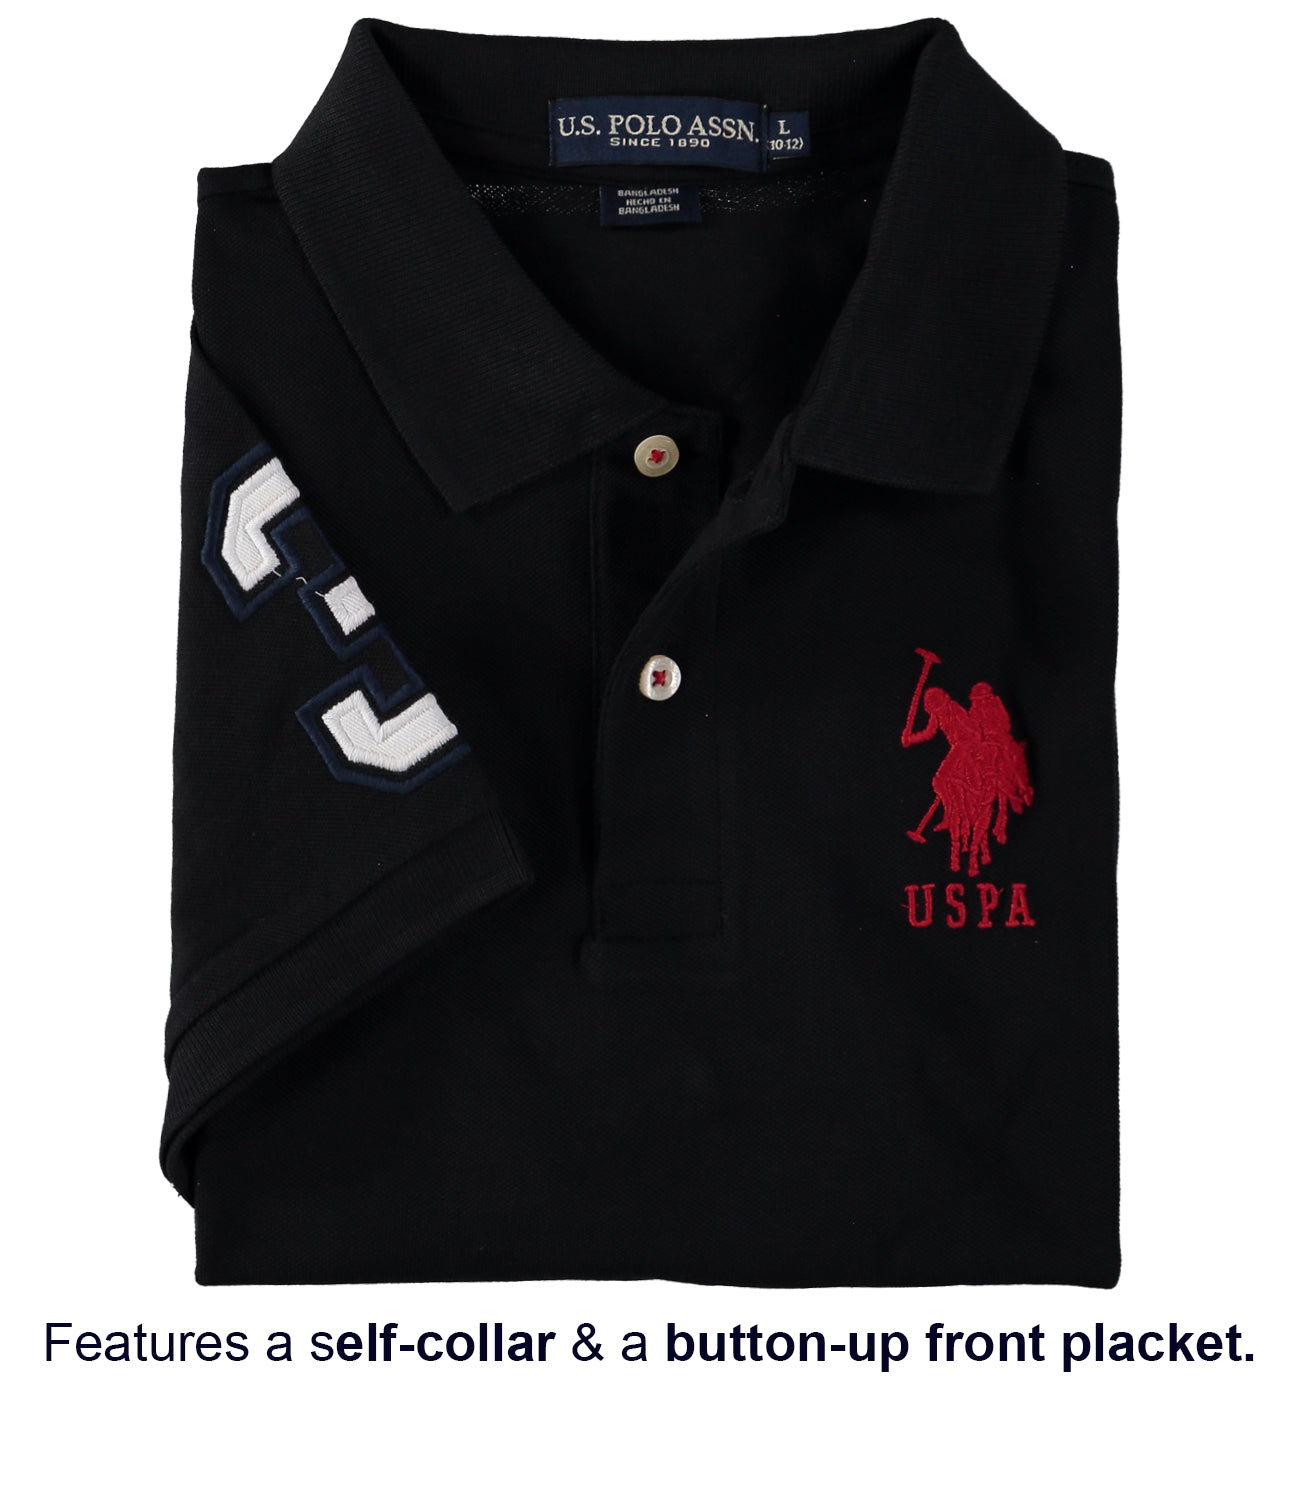 U.S. Polo Assn. Boys 8-20 Short-Sleeve Classic Polo Shirt with Big Pony Applique